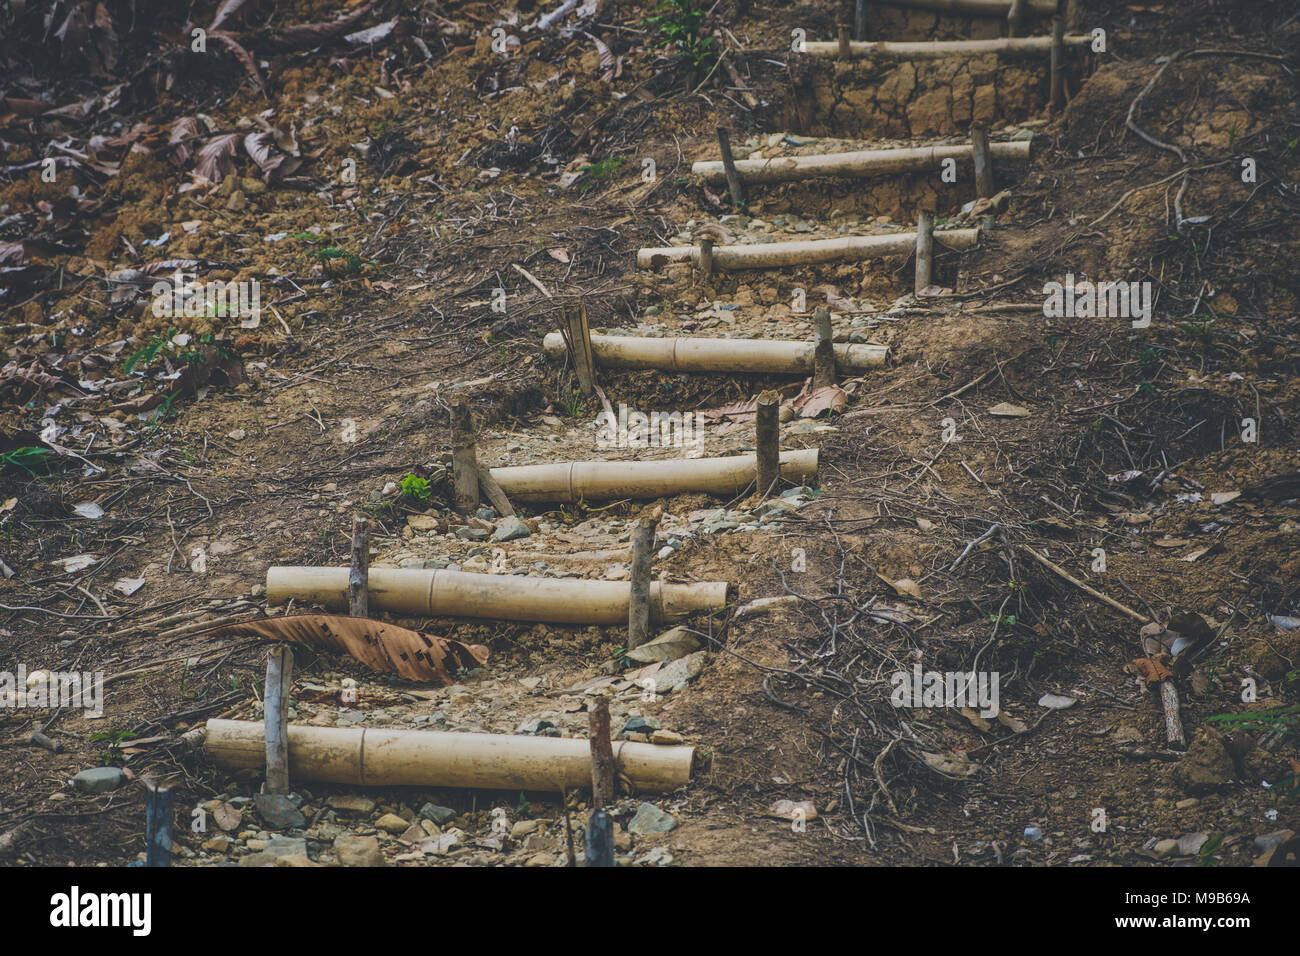 Bambus Treppen, Holz- Schritte - Wanderweg im Wald landschaft Stockfoto